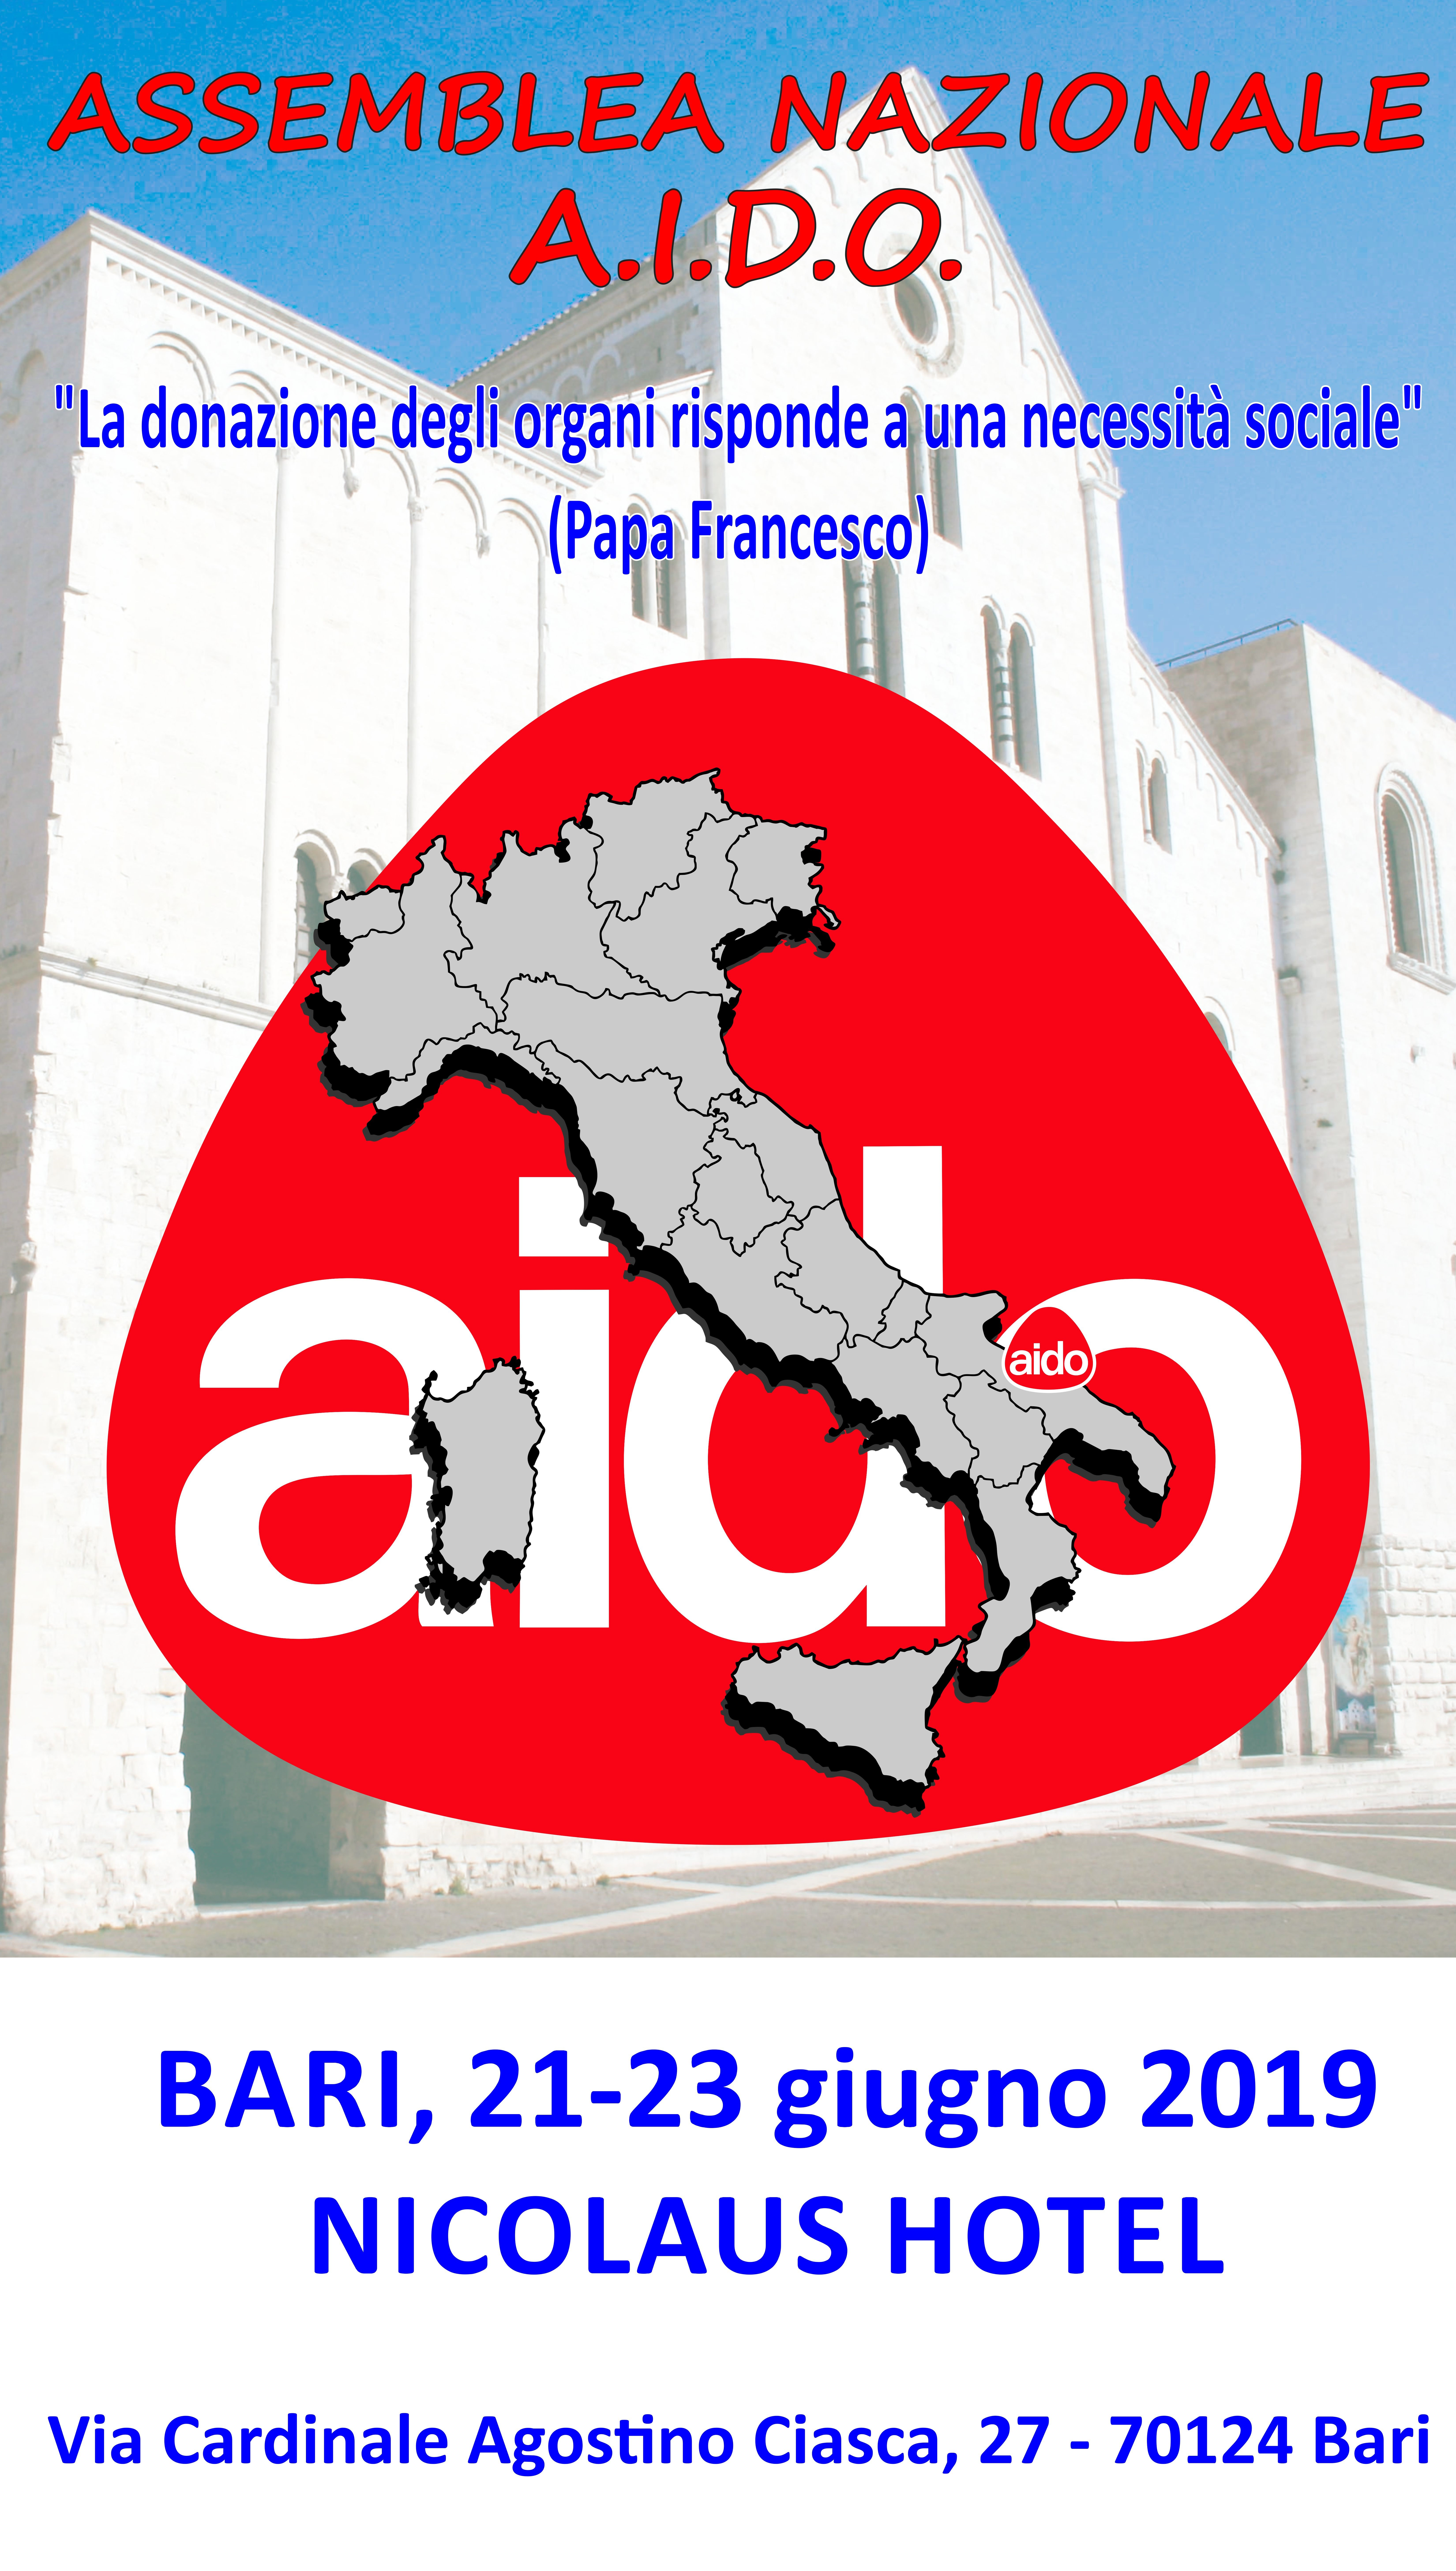 Assemblea nazionale A.I.D.O dal 21 al 23 giugno 2019 a Bari